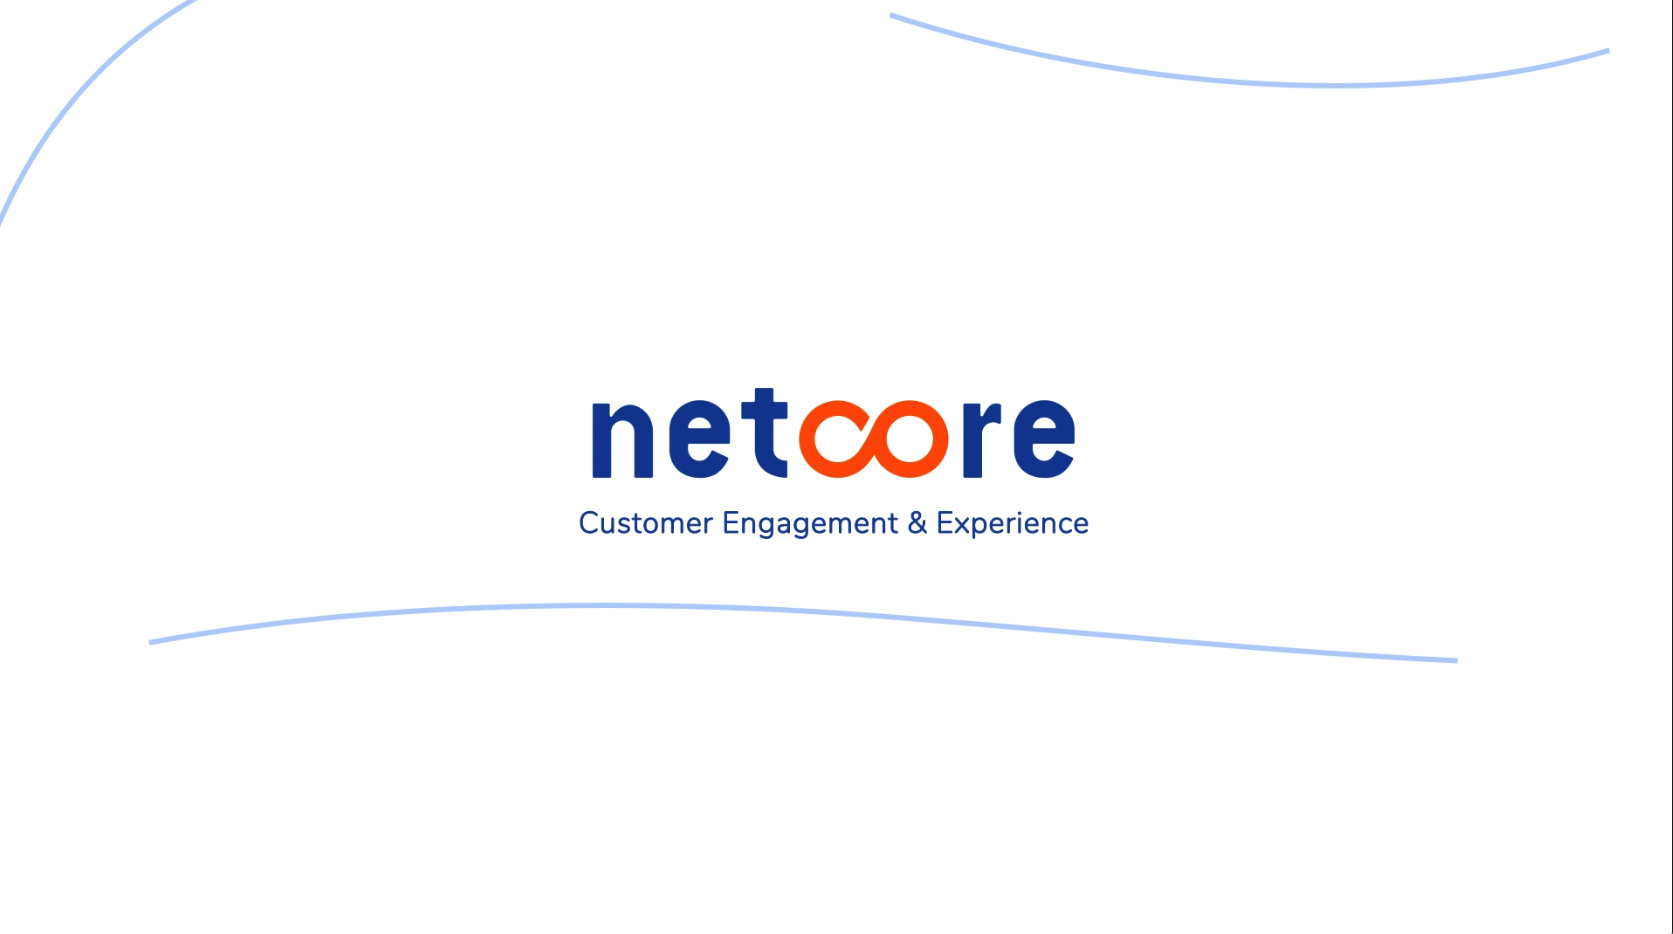 introducing netcore cee - netcore design